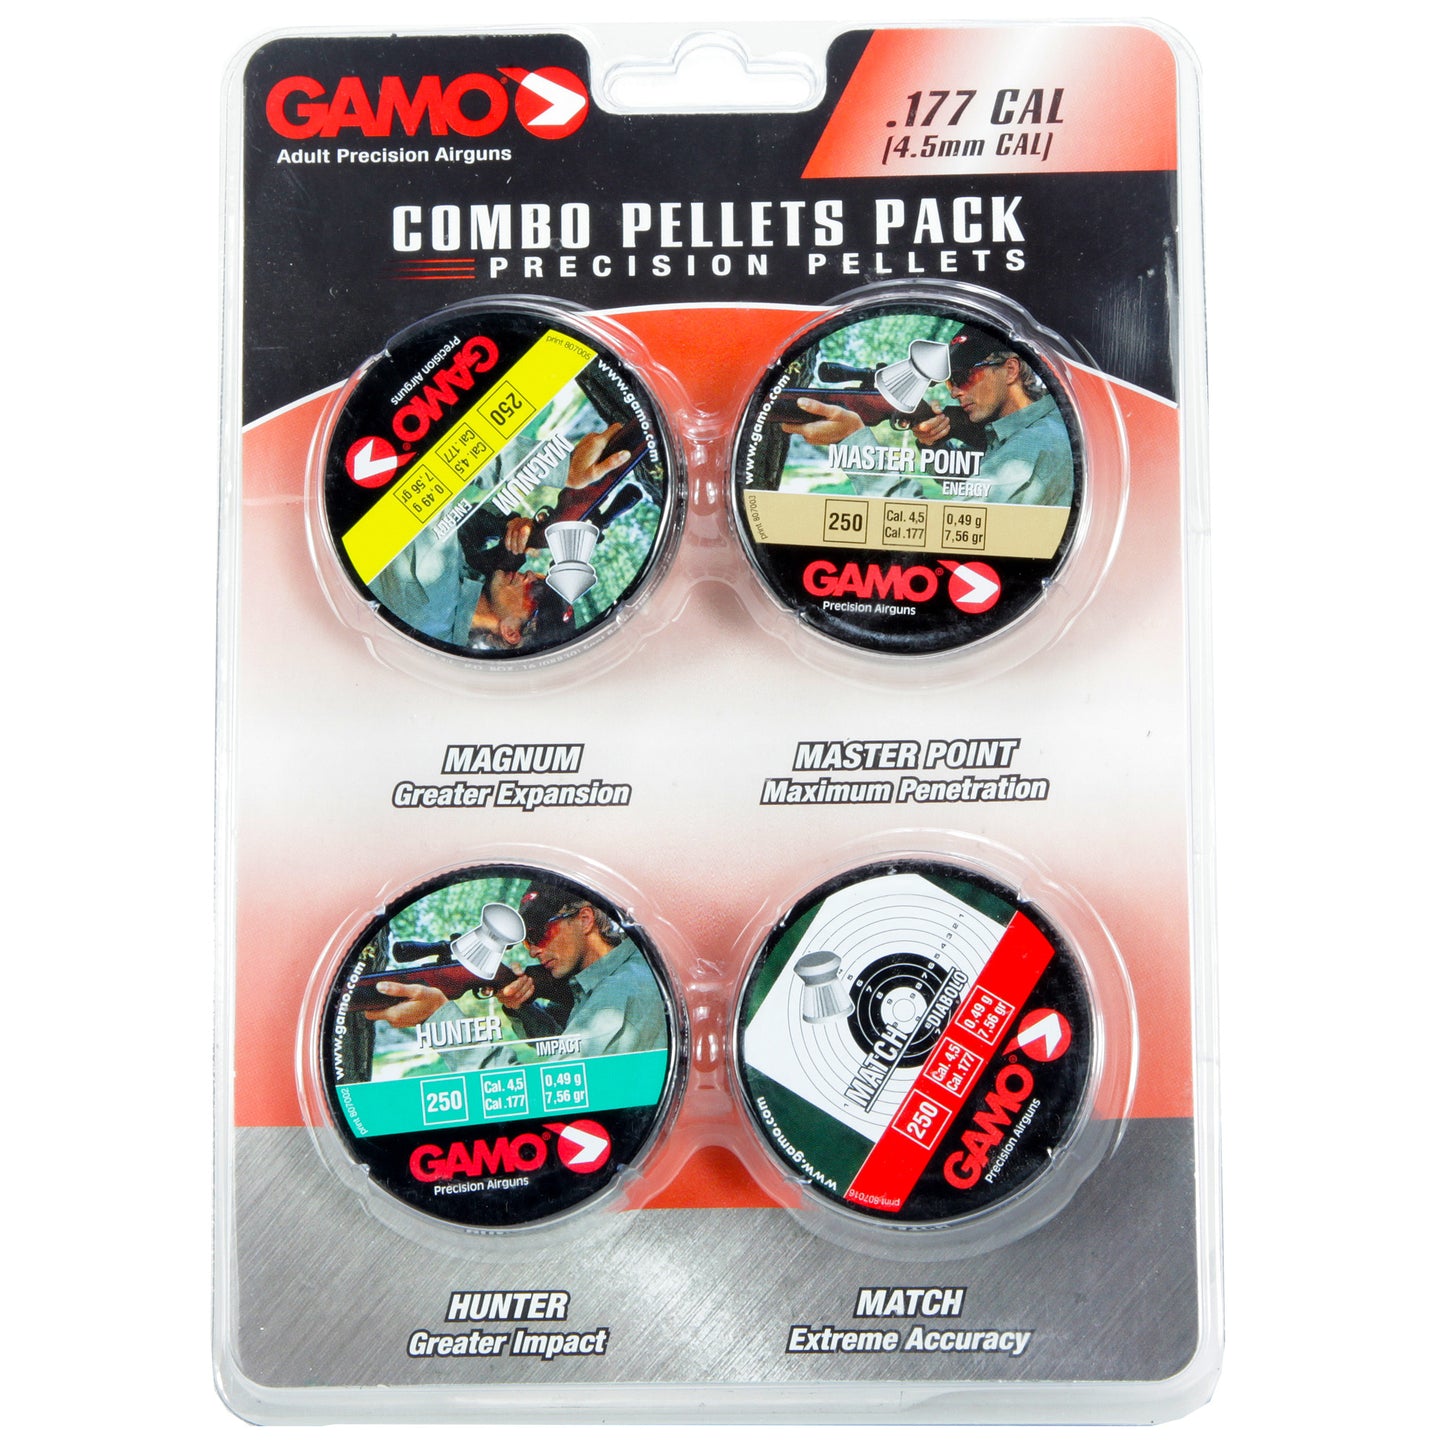 Gamo Combo Pack Precision Pellets .177 Pellets Blister Card 1000 Pack 632092954 - California Shooting Supplies